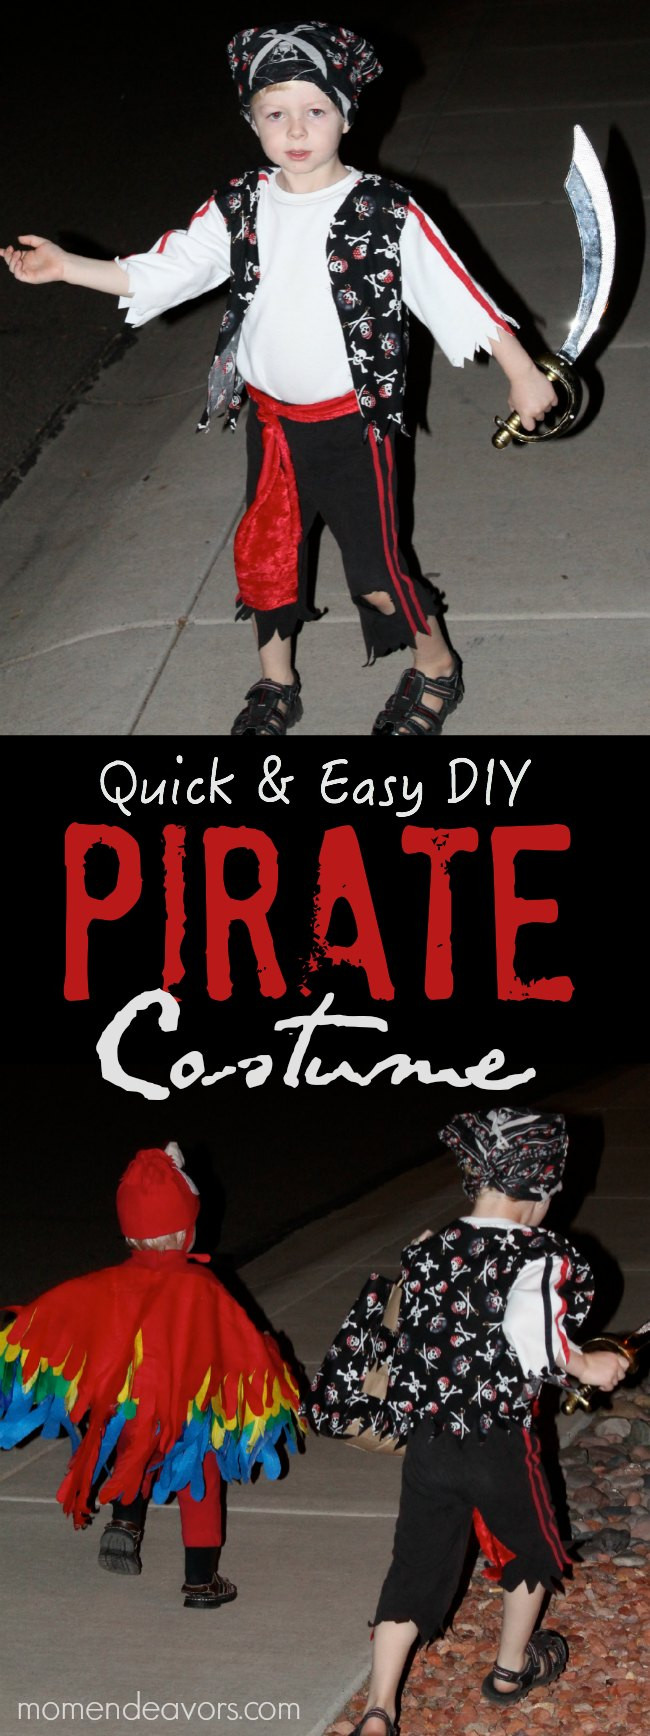 DIY Pirate Costume
 Quick & Easy DIY Pirate Halloween Costume